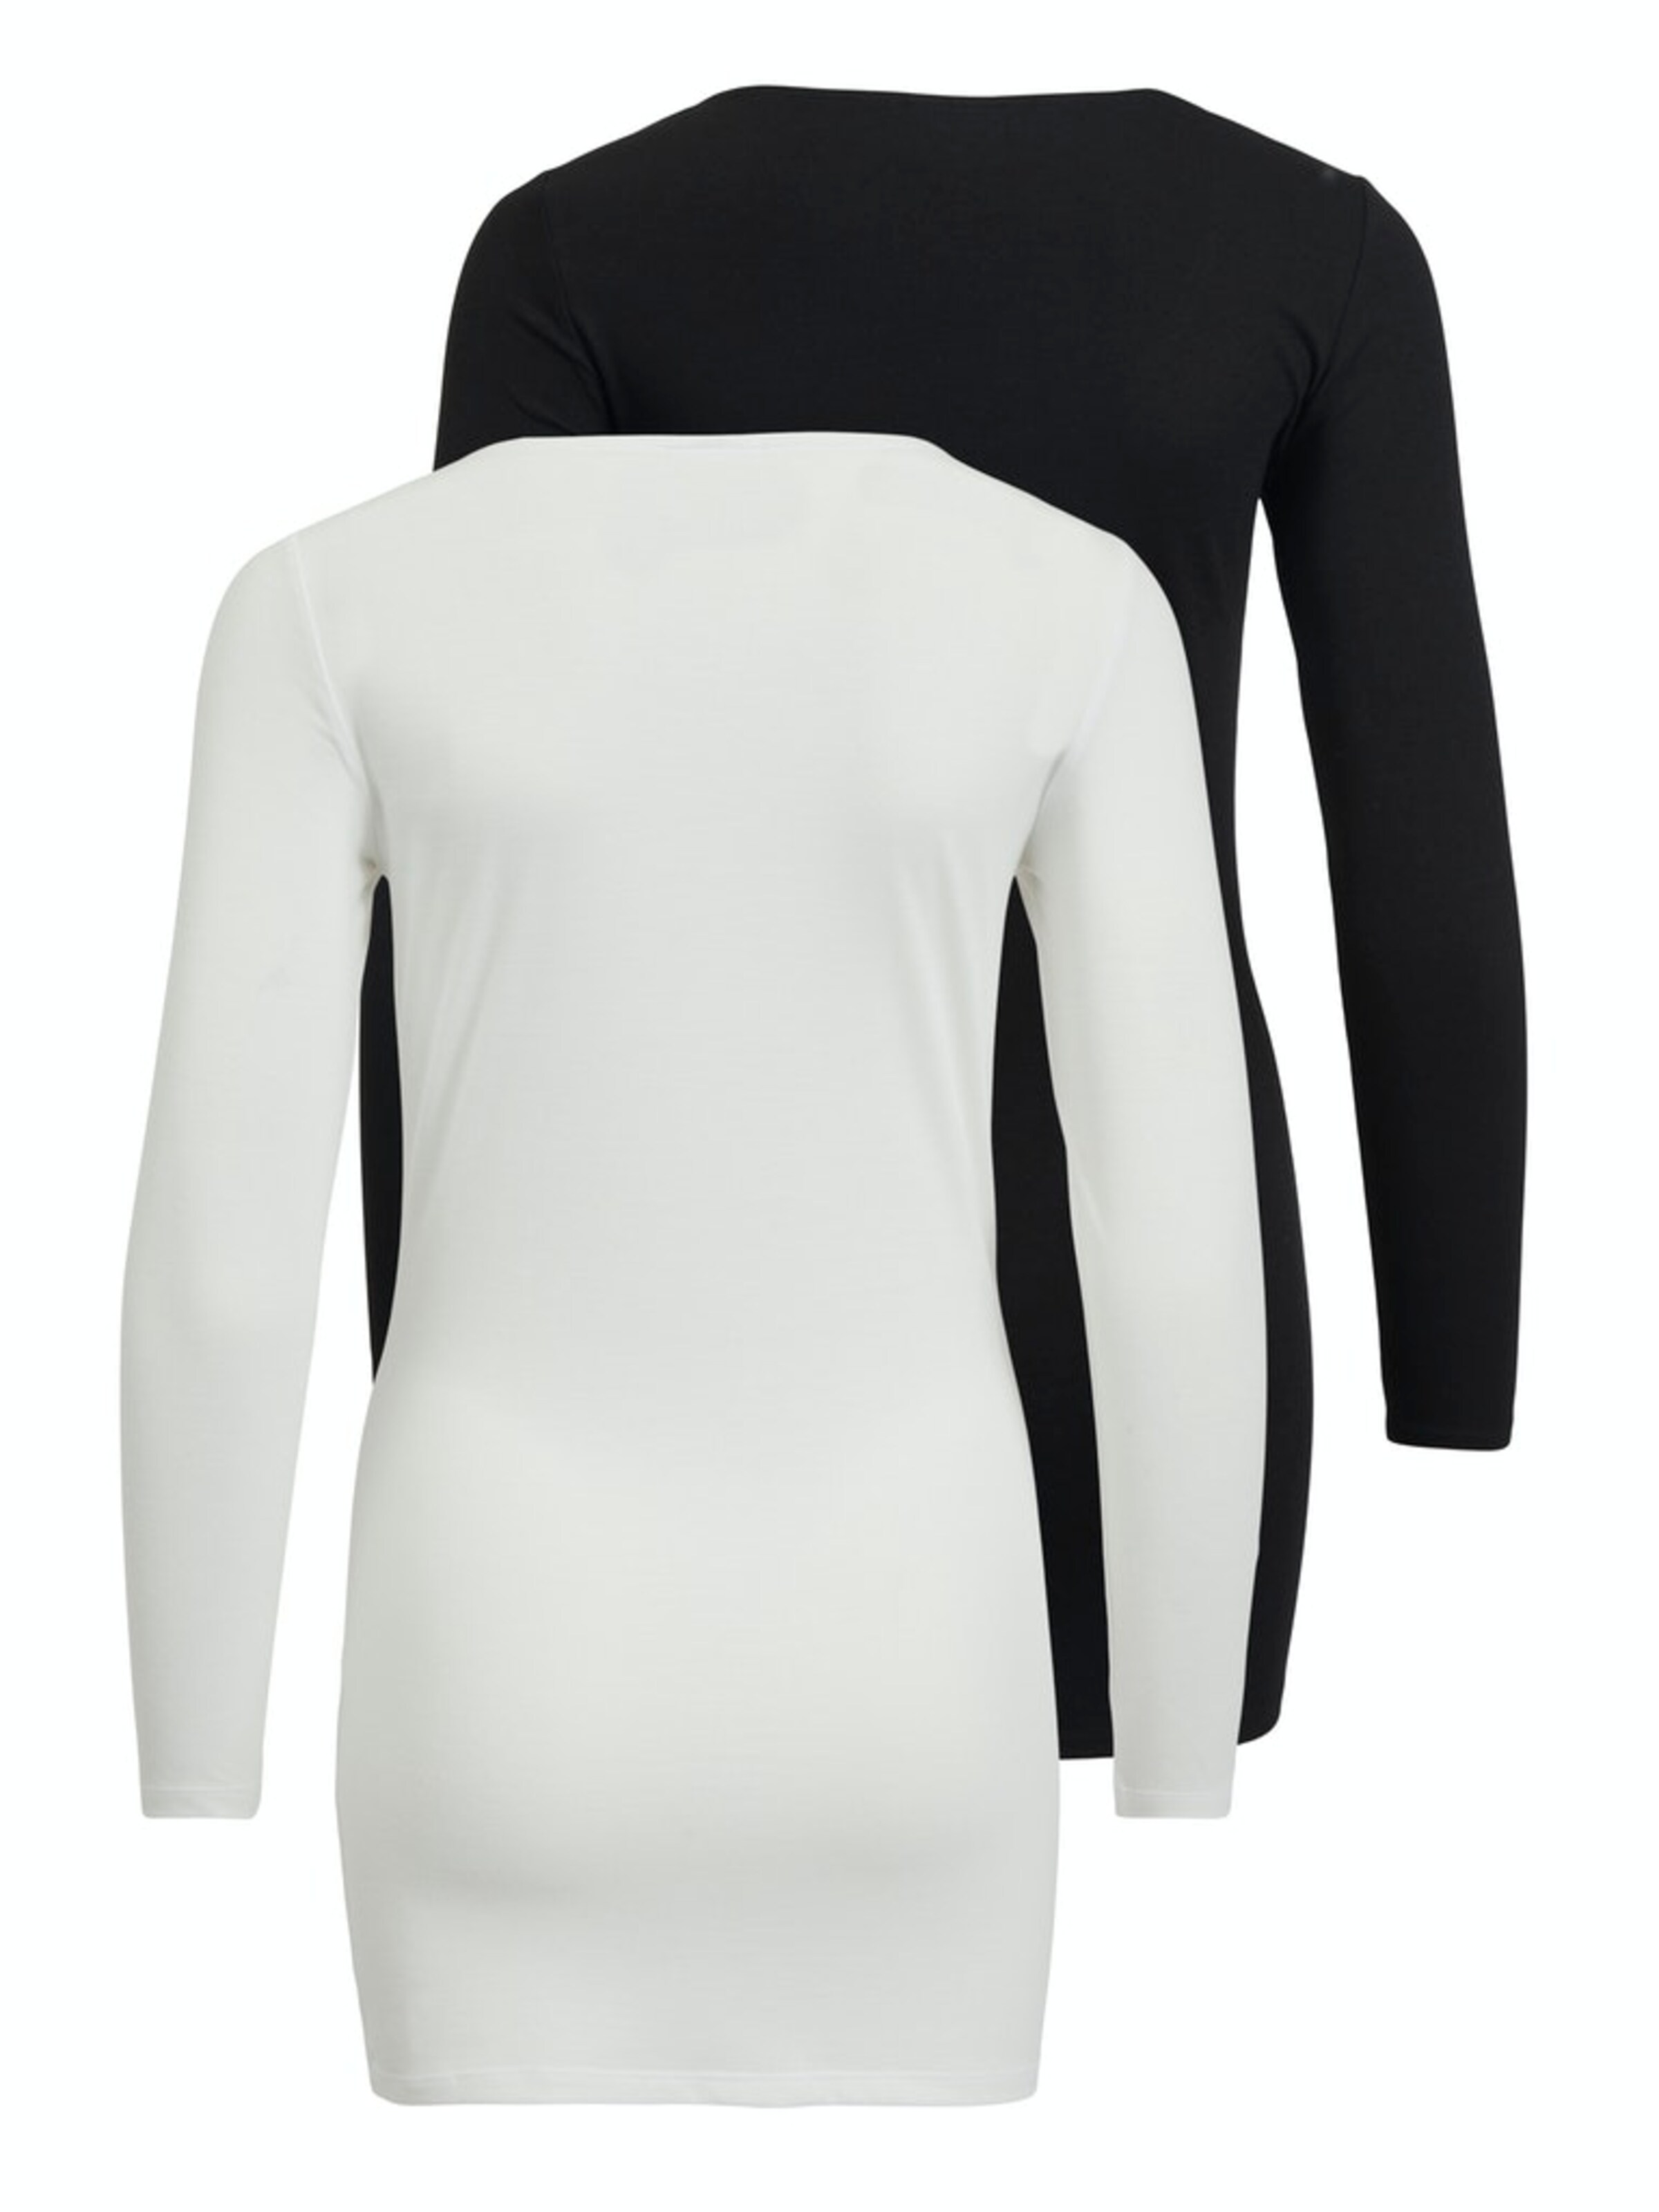 VILA Shirt Athena in Schwarz, Weiß 